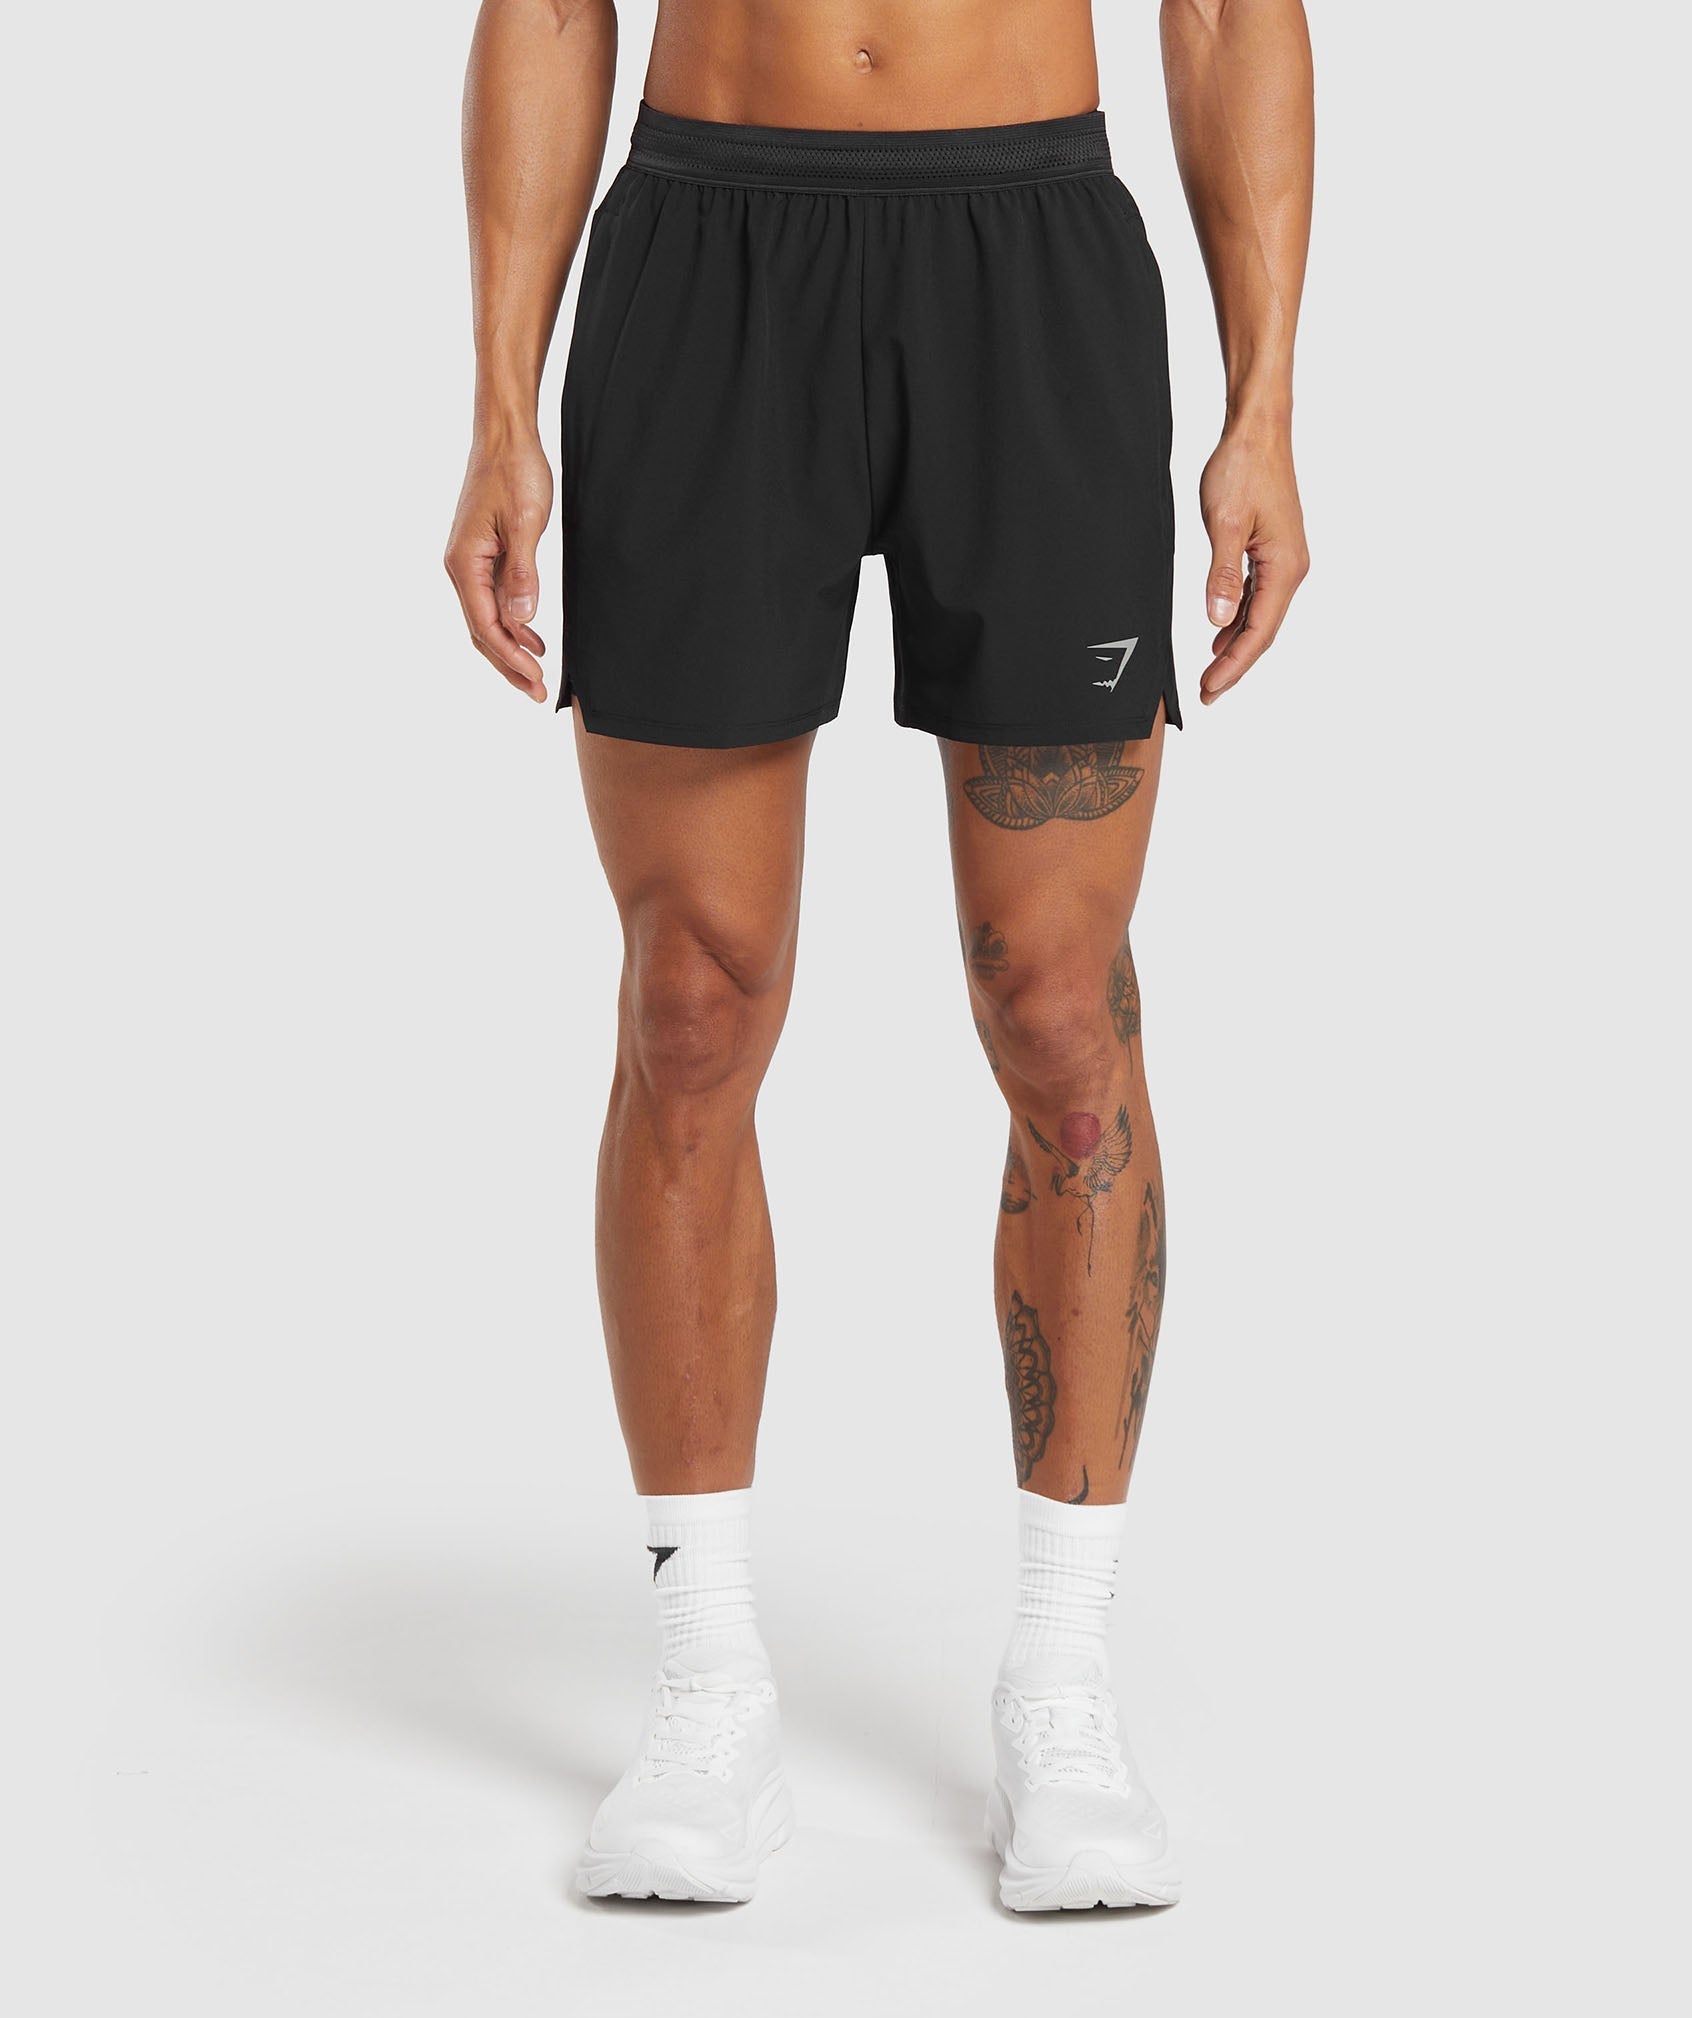 Speed 5" Shorts in Black